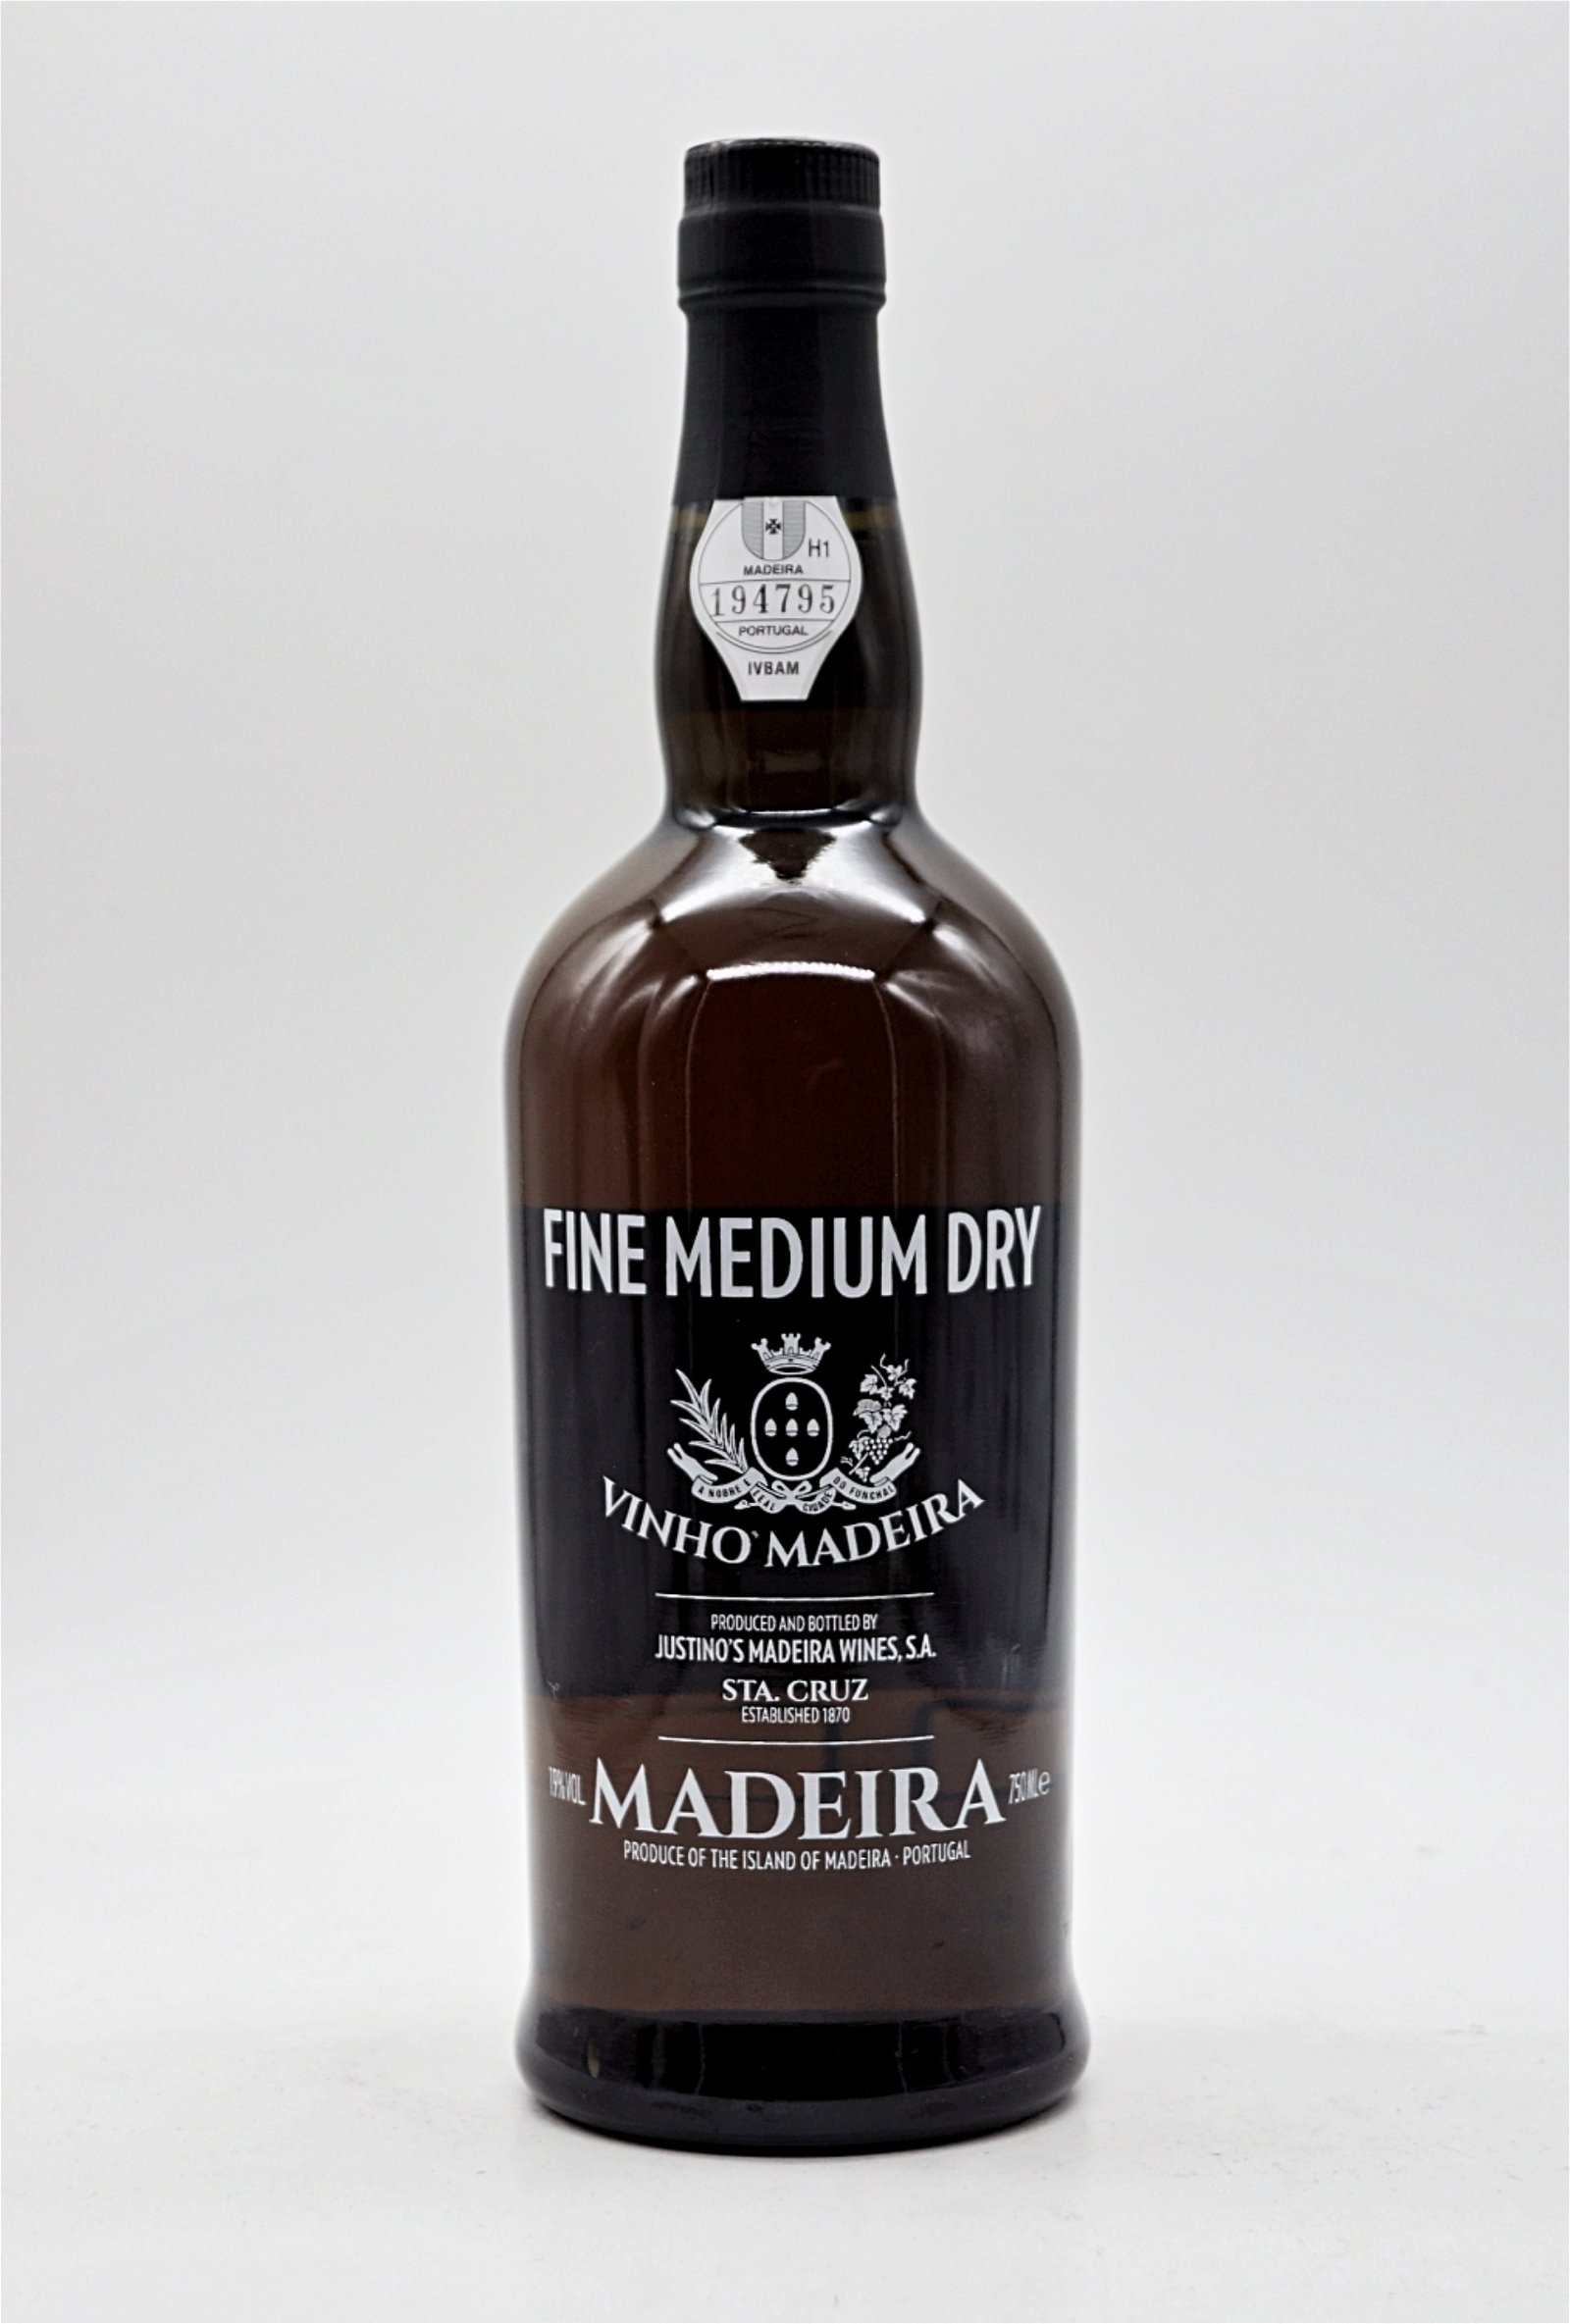 Justinos Madeira Wines Fine Medium Dry Vinho Madeira